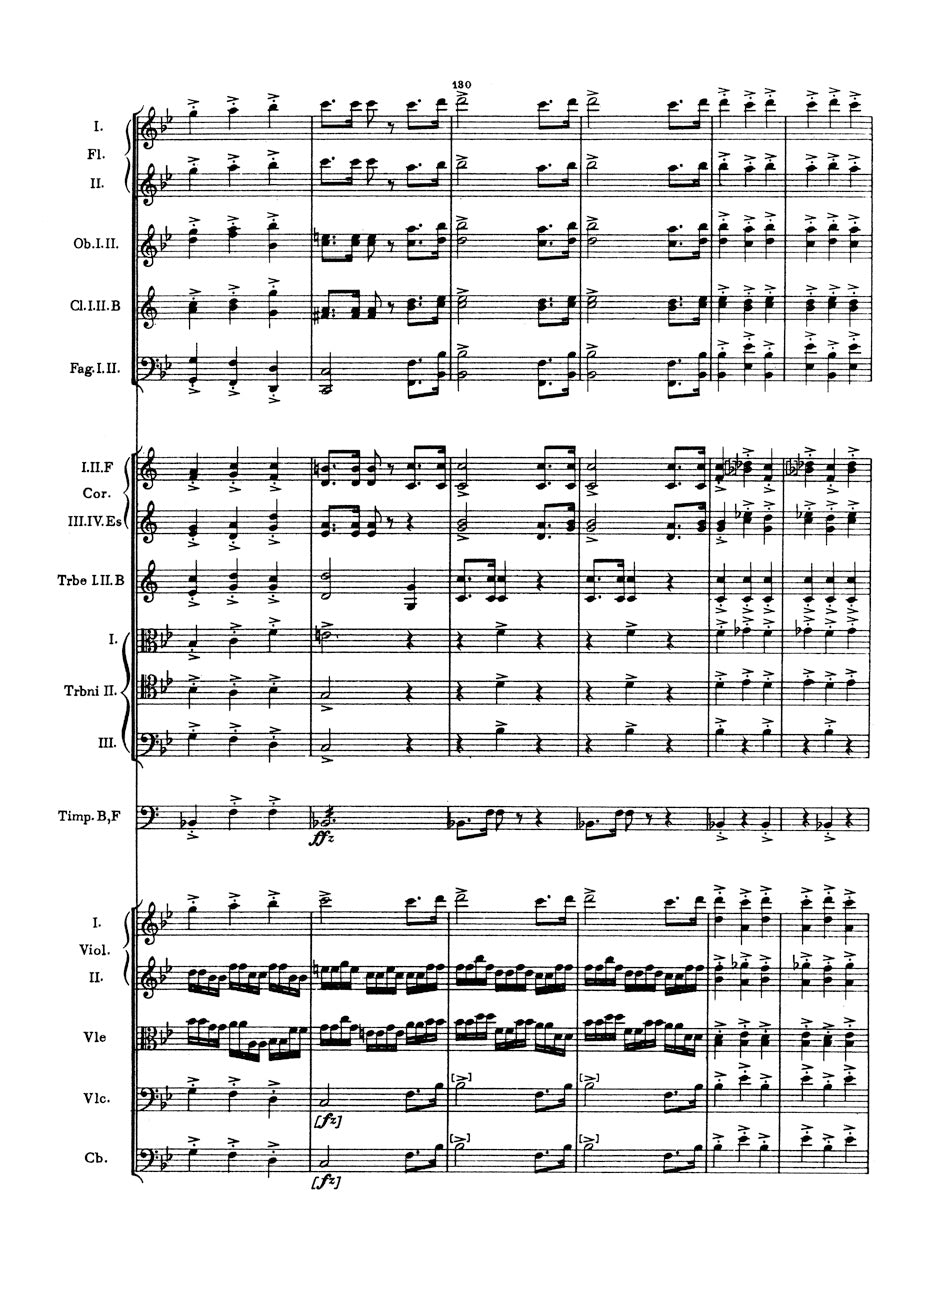 Dvorák Symphonie Nr. 2 B-Dur op. 4